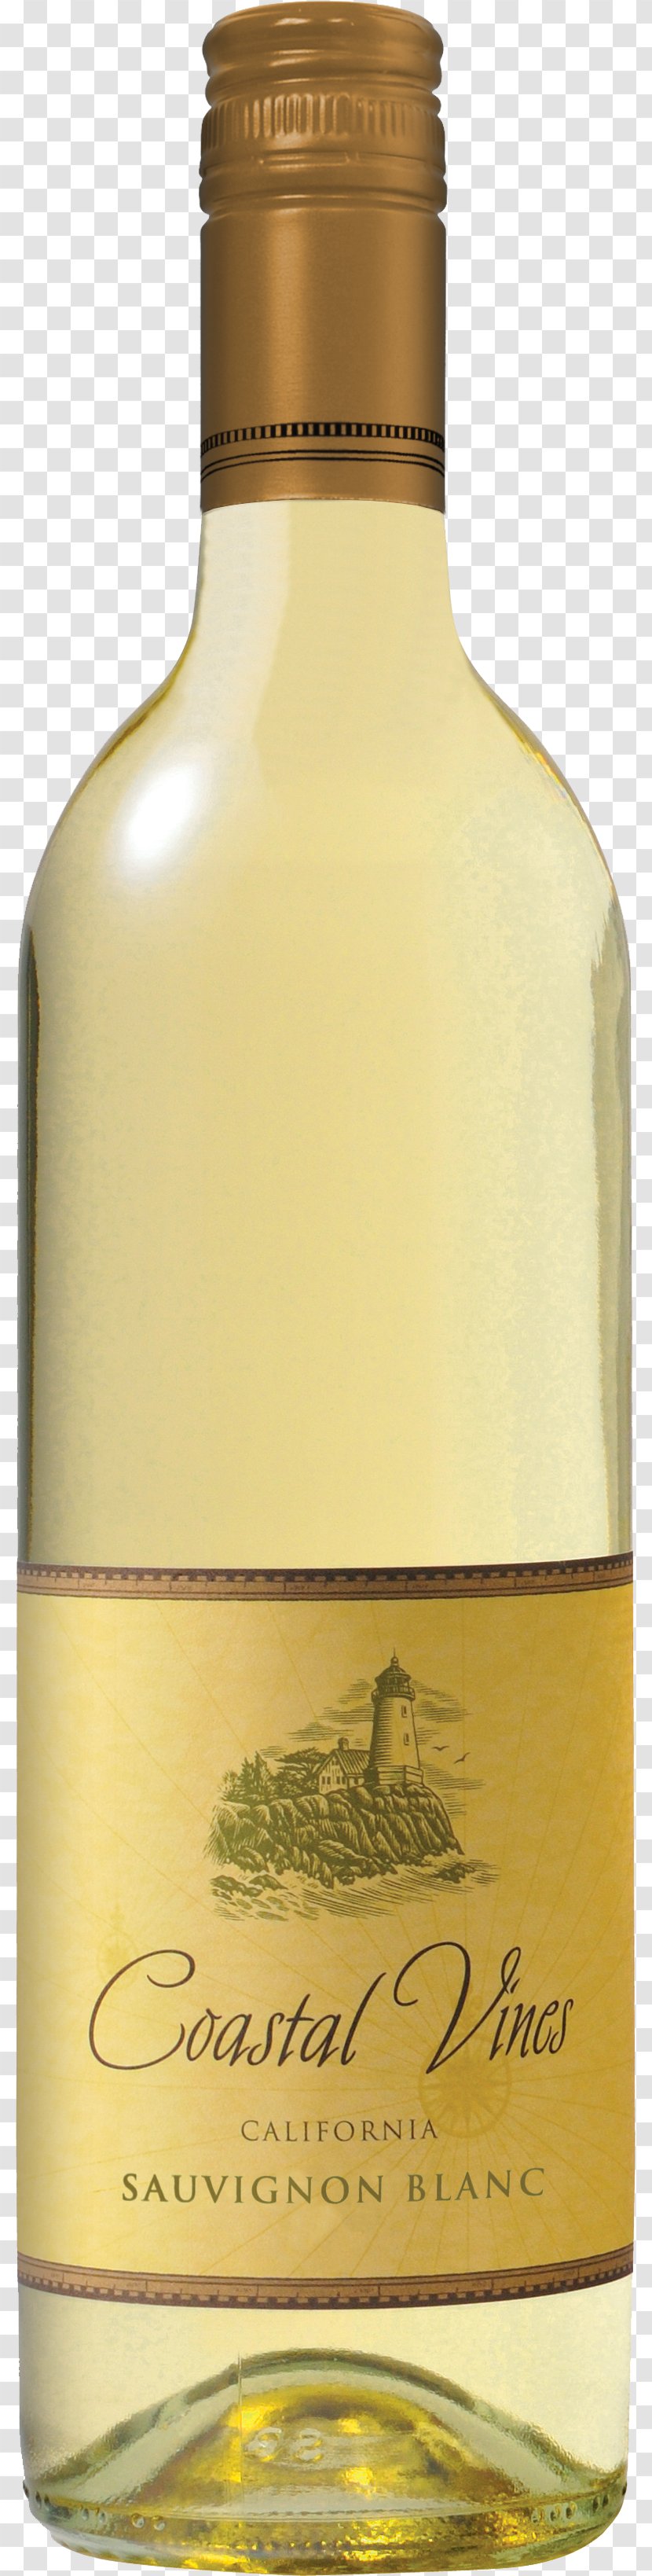 Sparkling Wine Pinot Noir White Bronco Company Transparent PNG